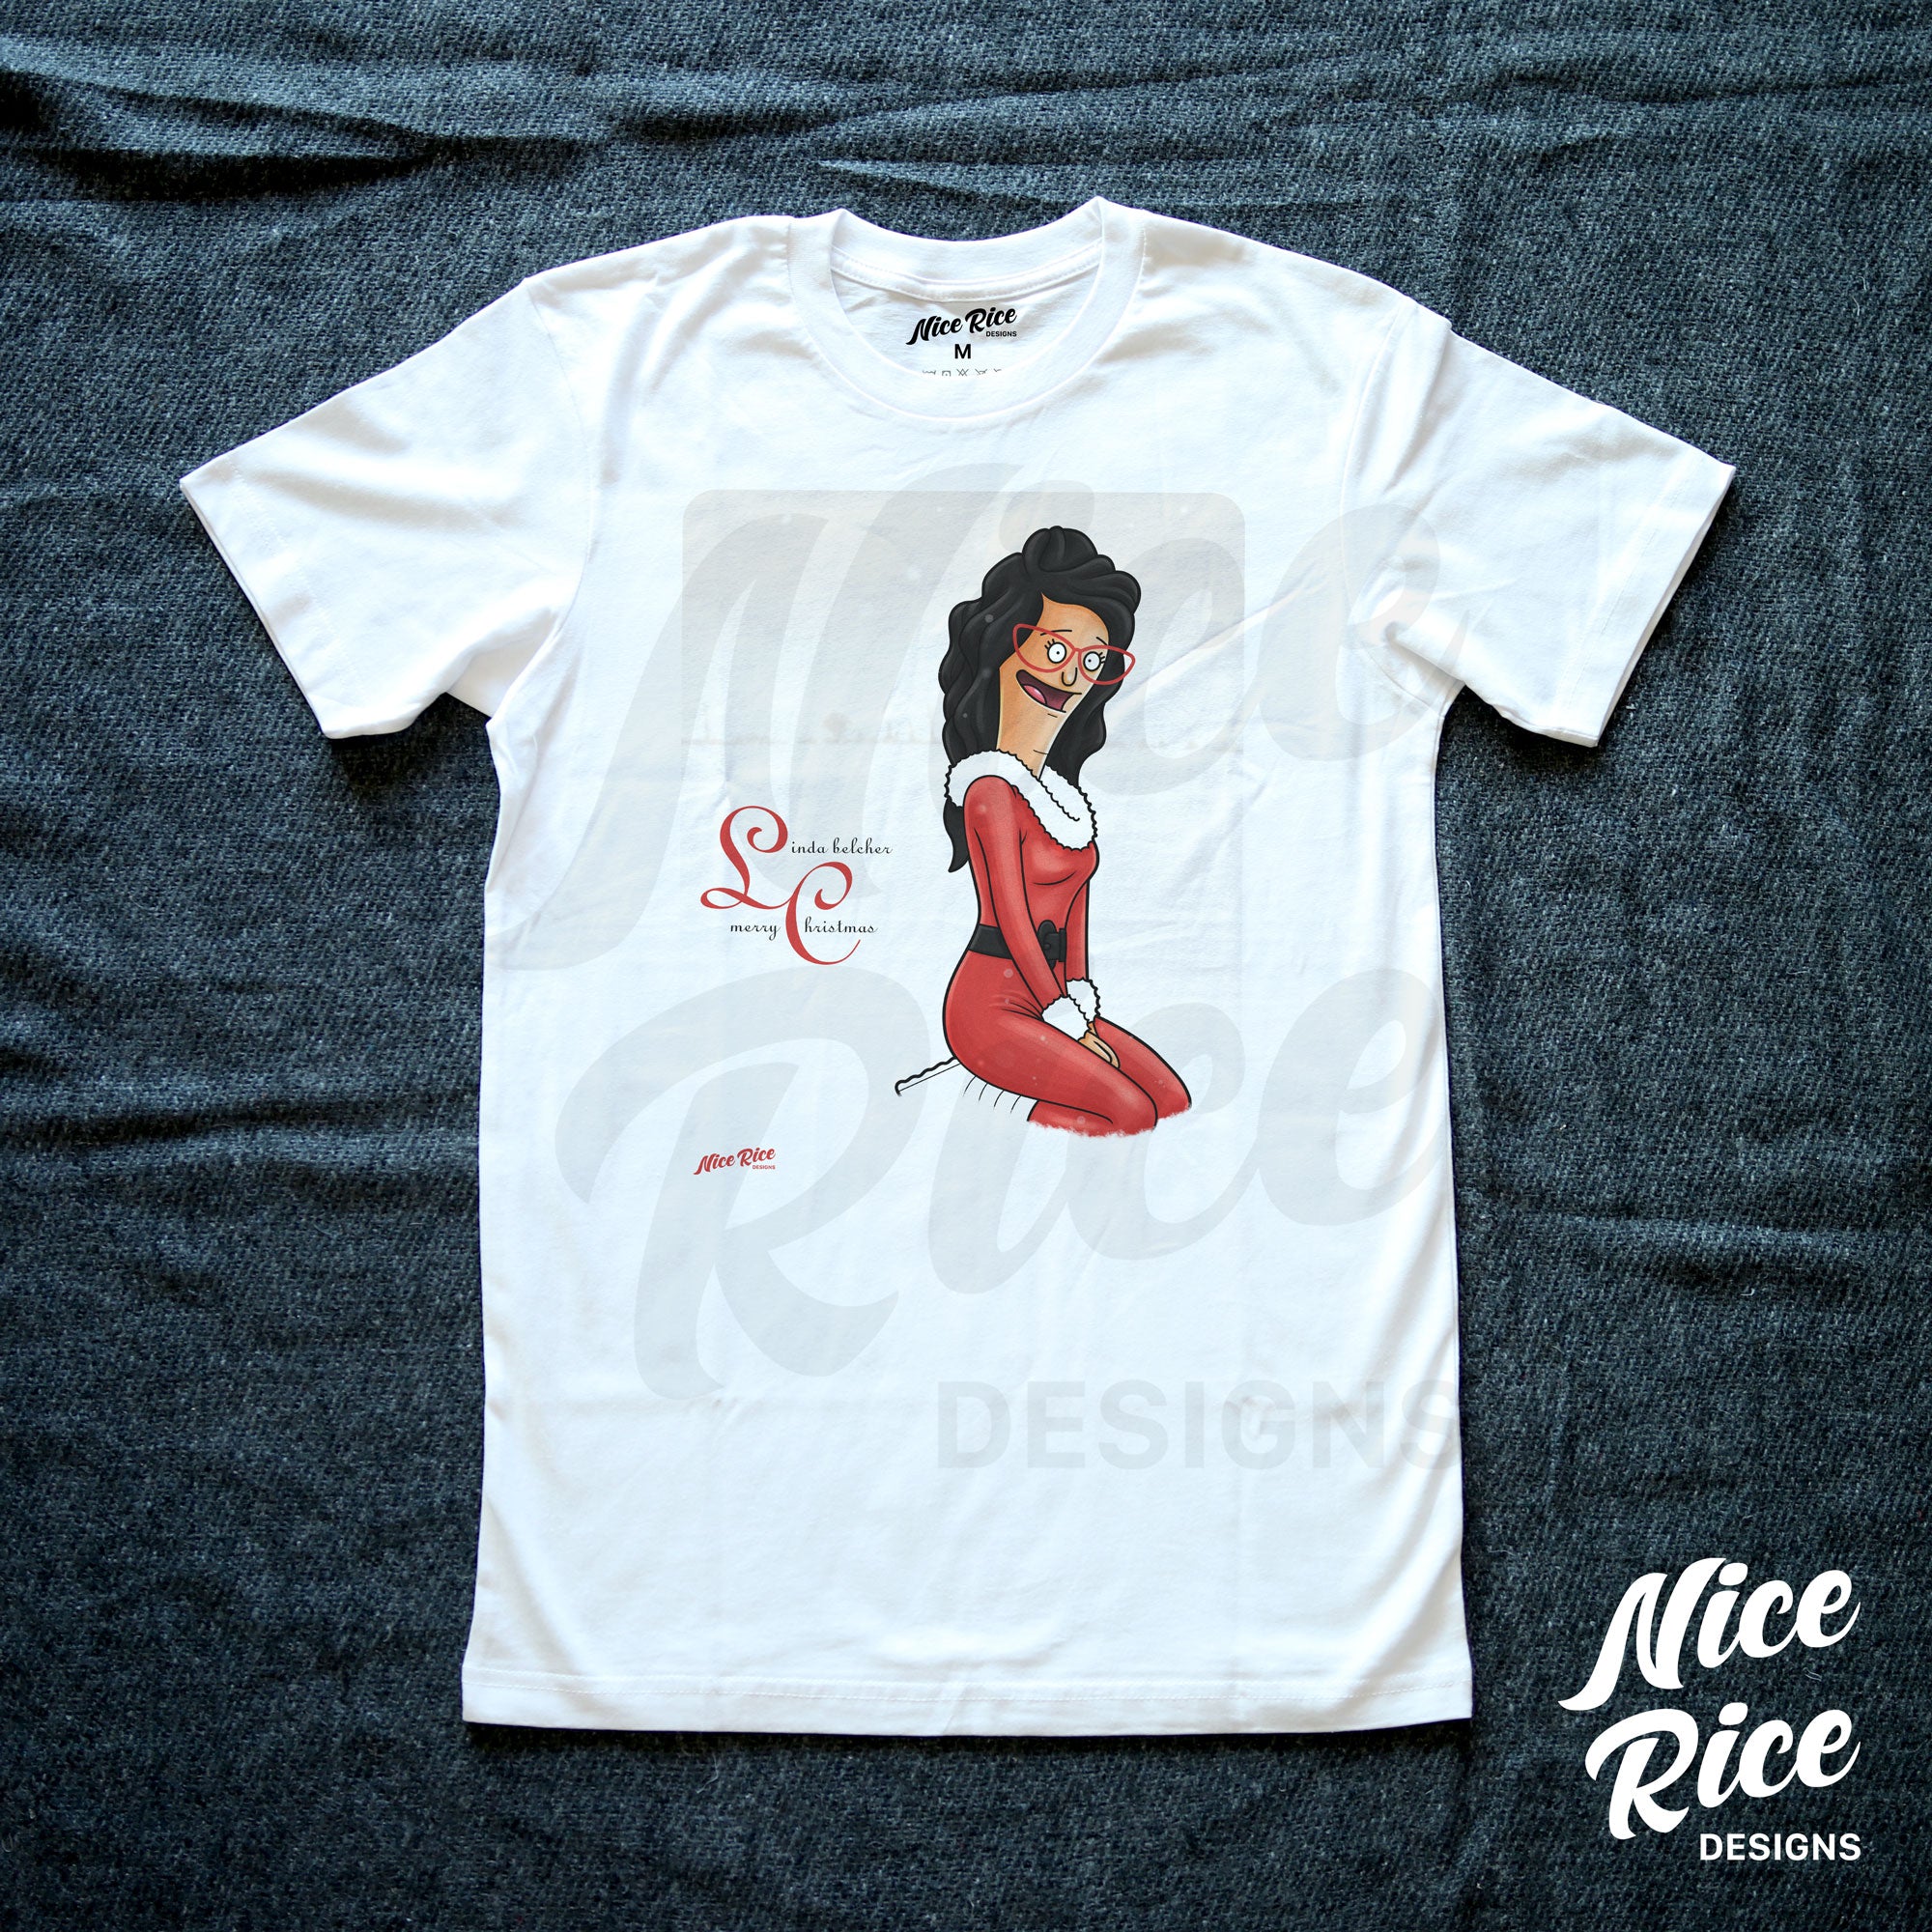 Merry Christmas Shirt by Nice Rice Designs